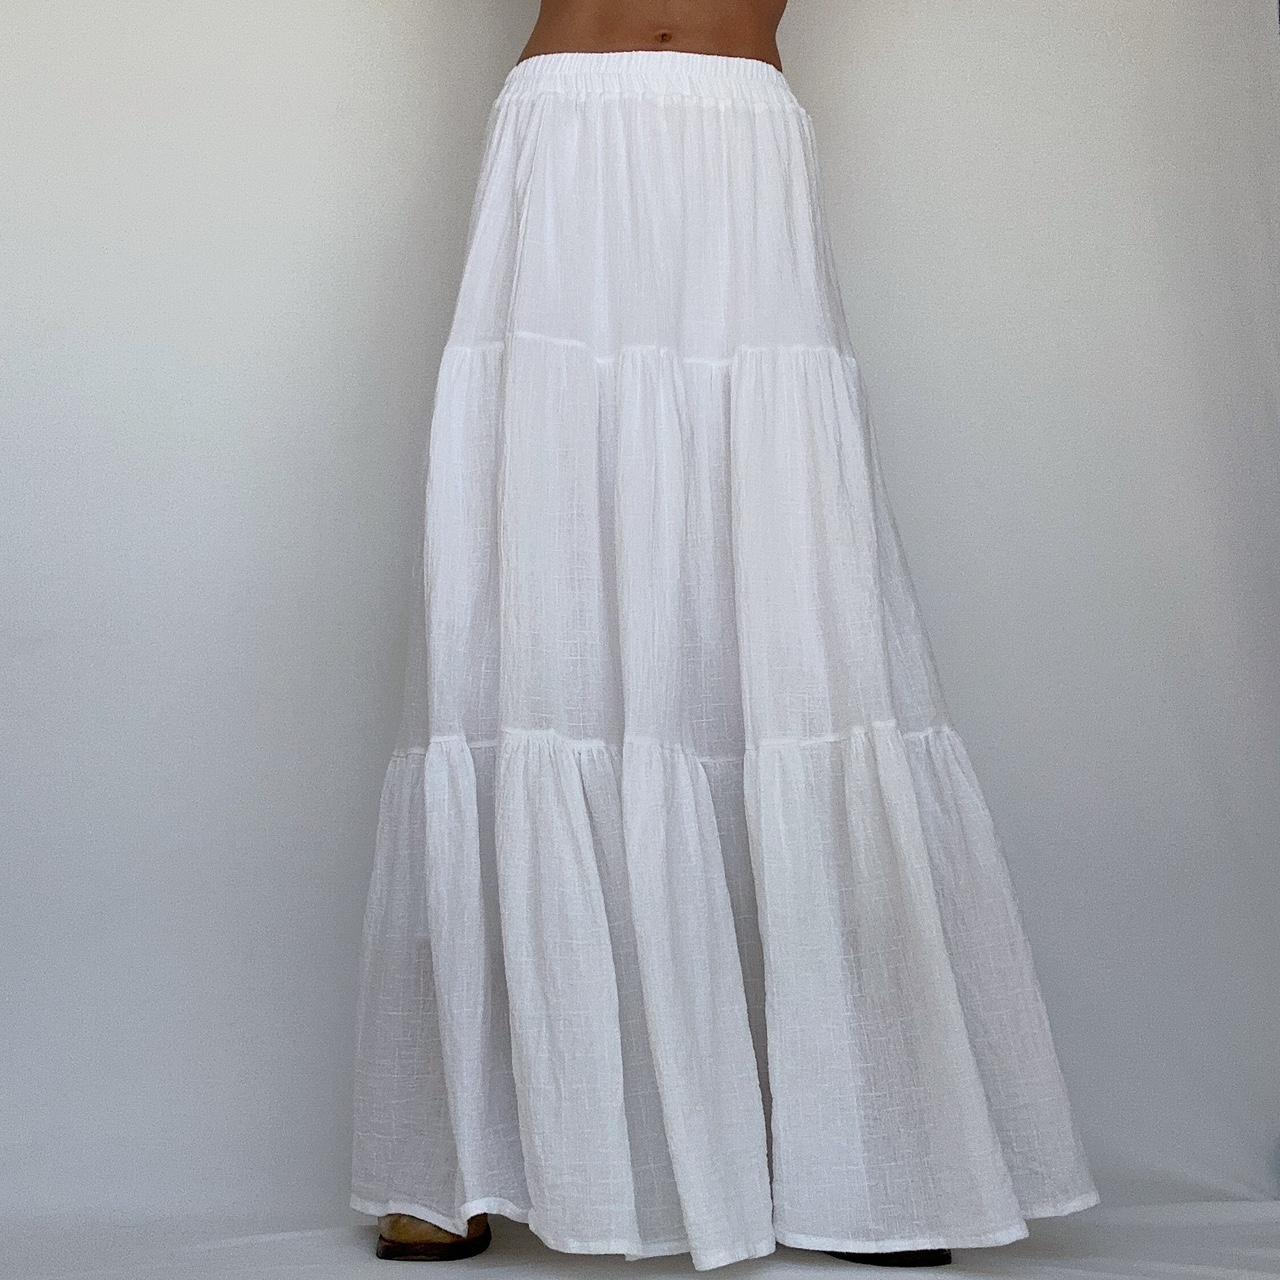 Stunning long tiered skirt 🤍 White Elastic waist... - Depop